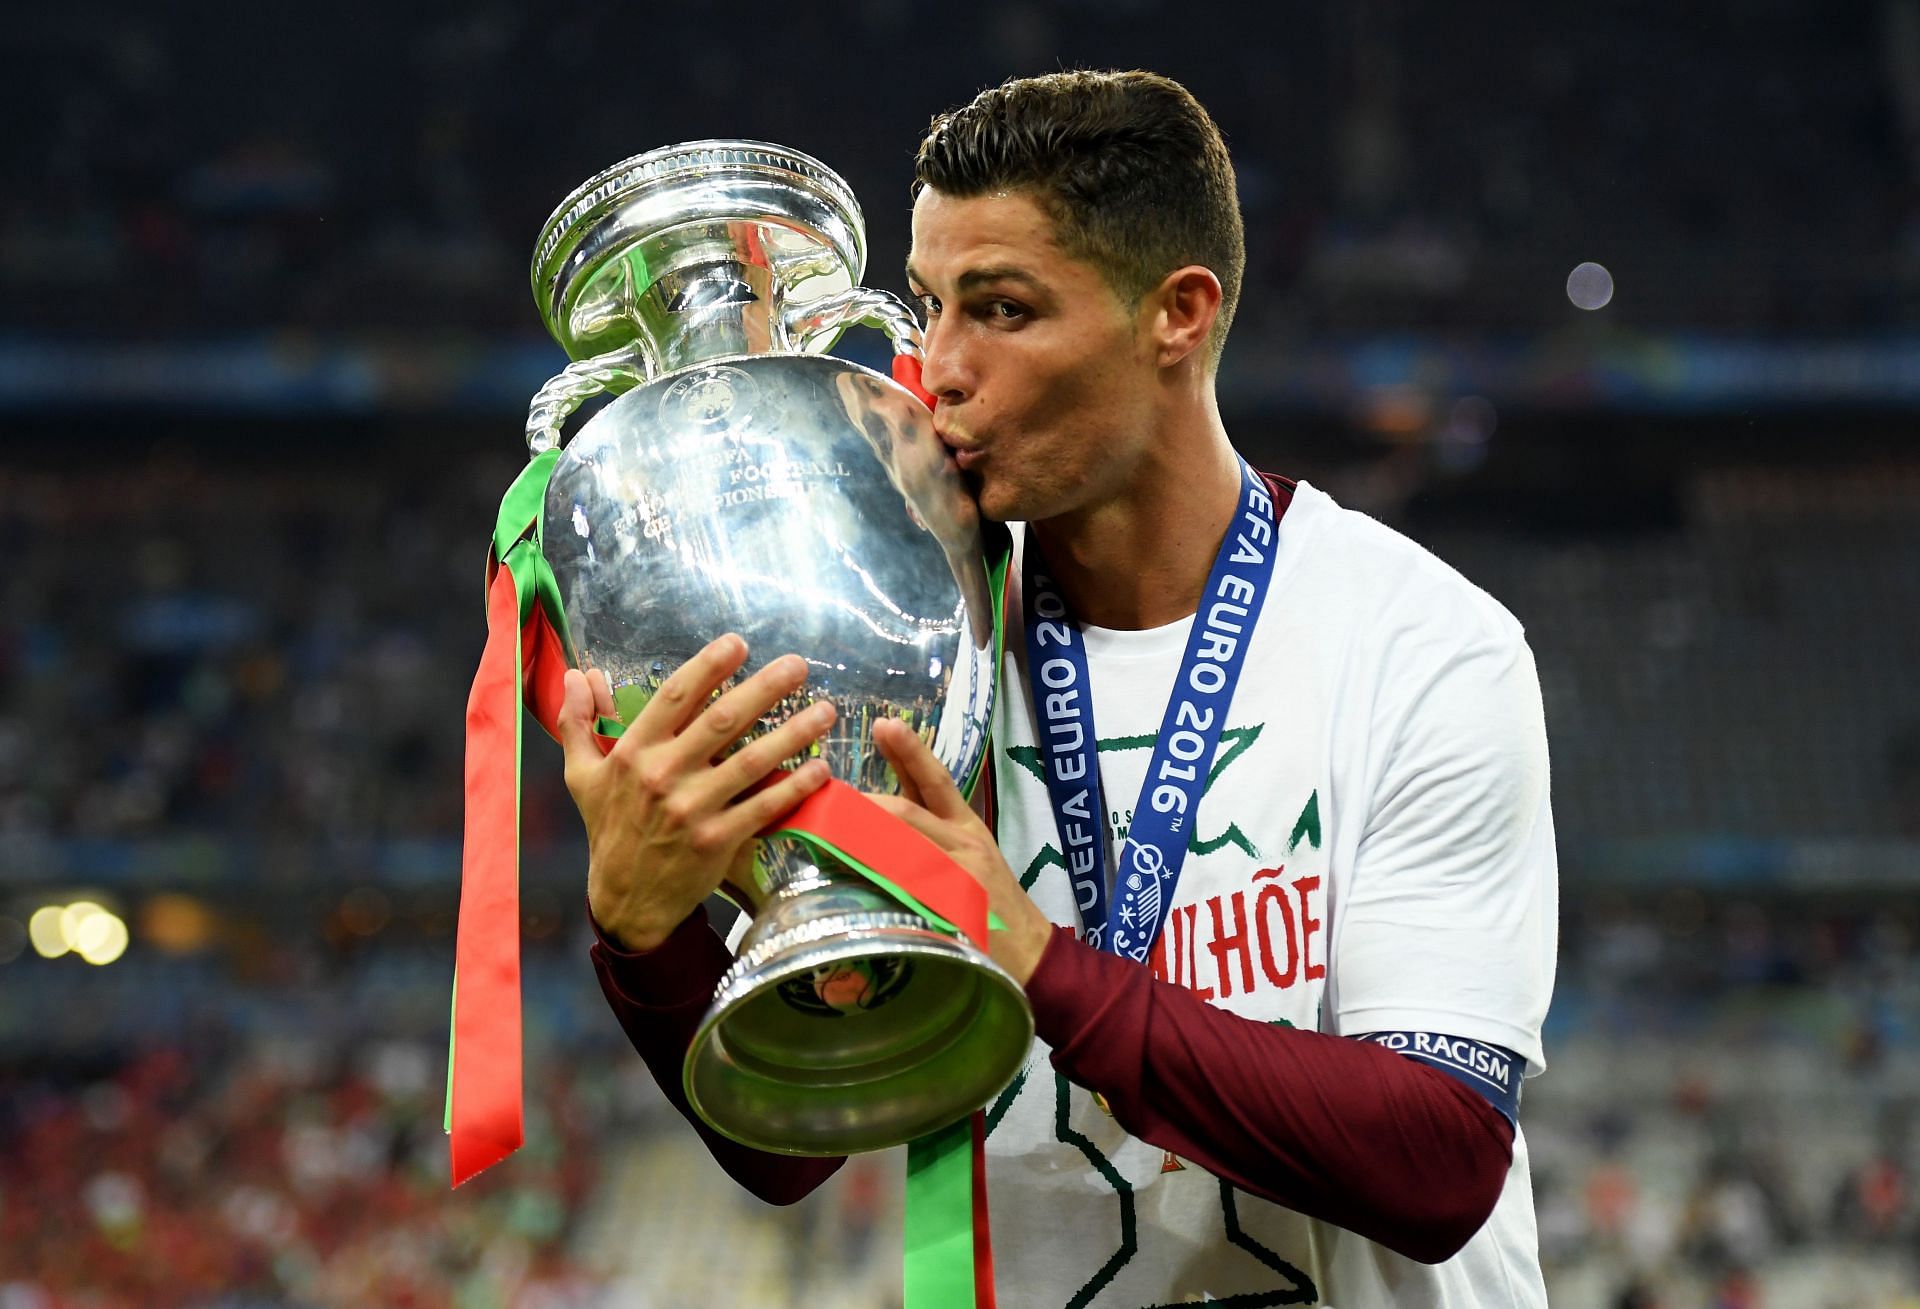 Cristiano Ronaldo won the European Championships in 2016.